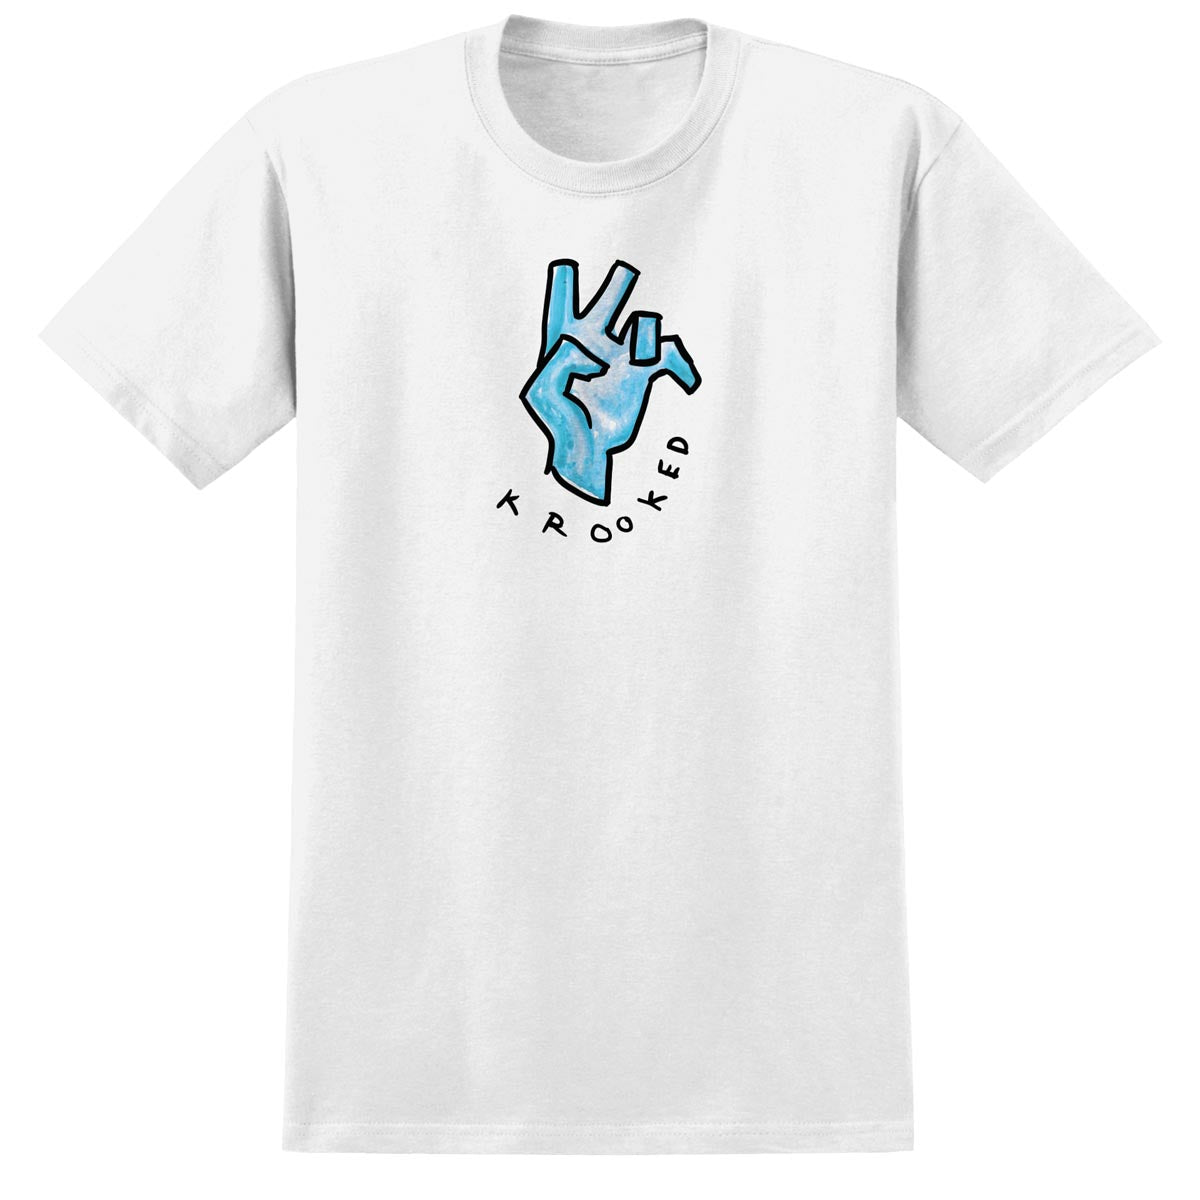 Krooked Handy T-Shirt - White/Blue/Black image 1